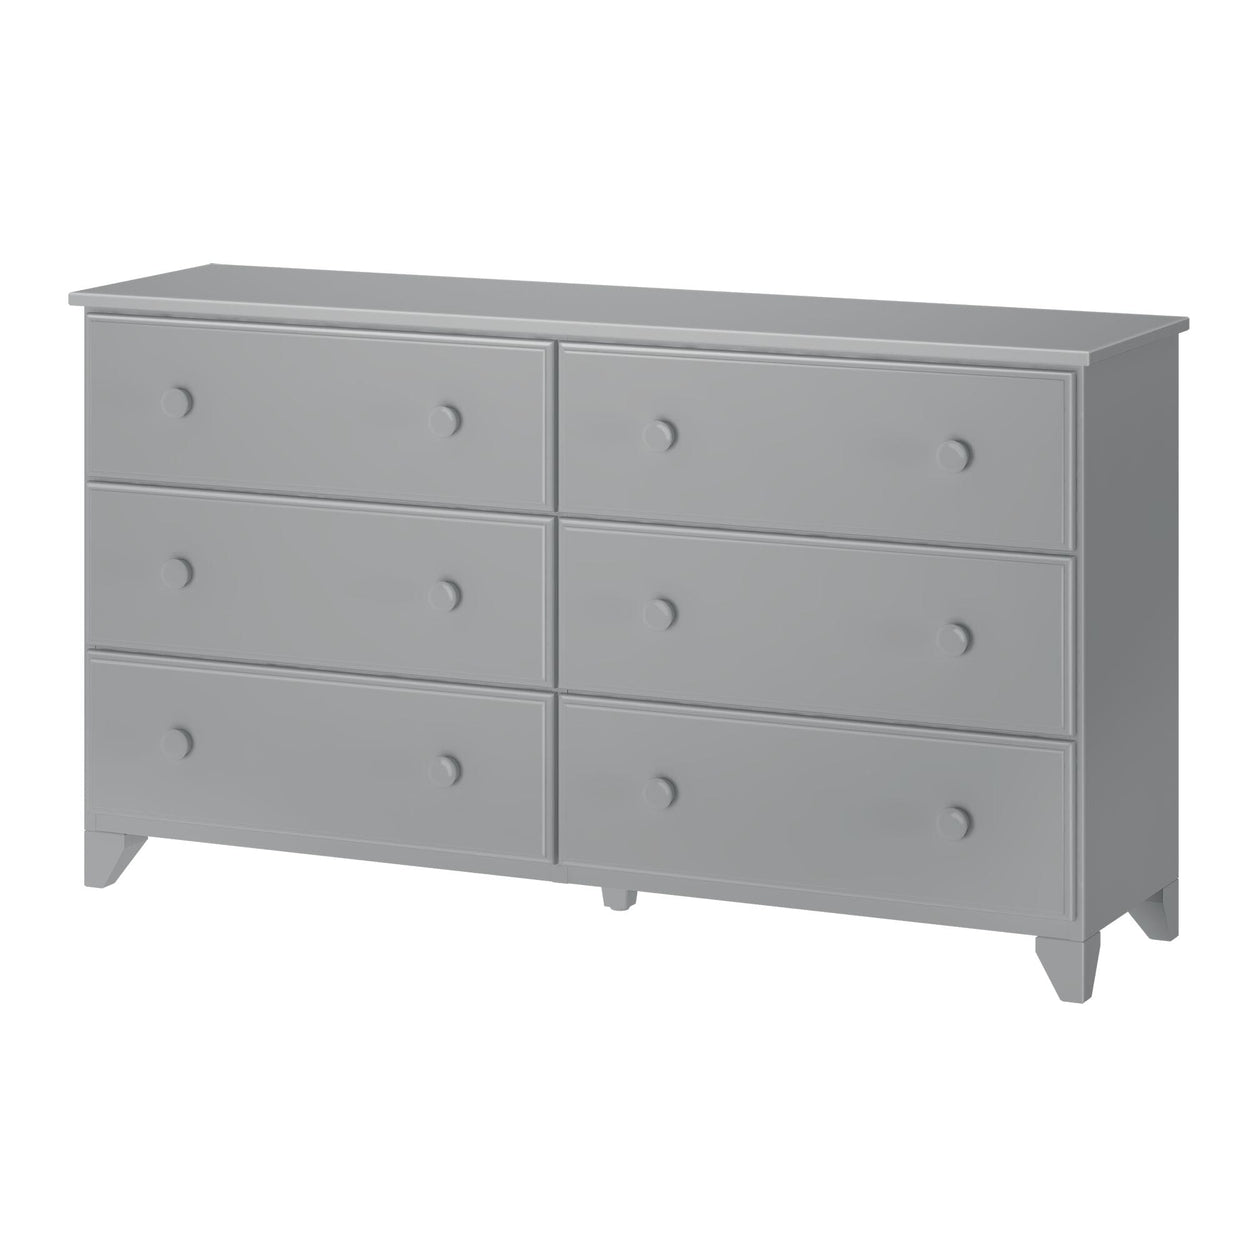 180016-121 : Furniture 6-Drawer Dresser, Grey